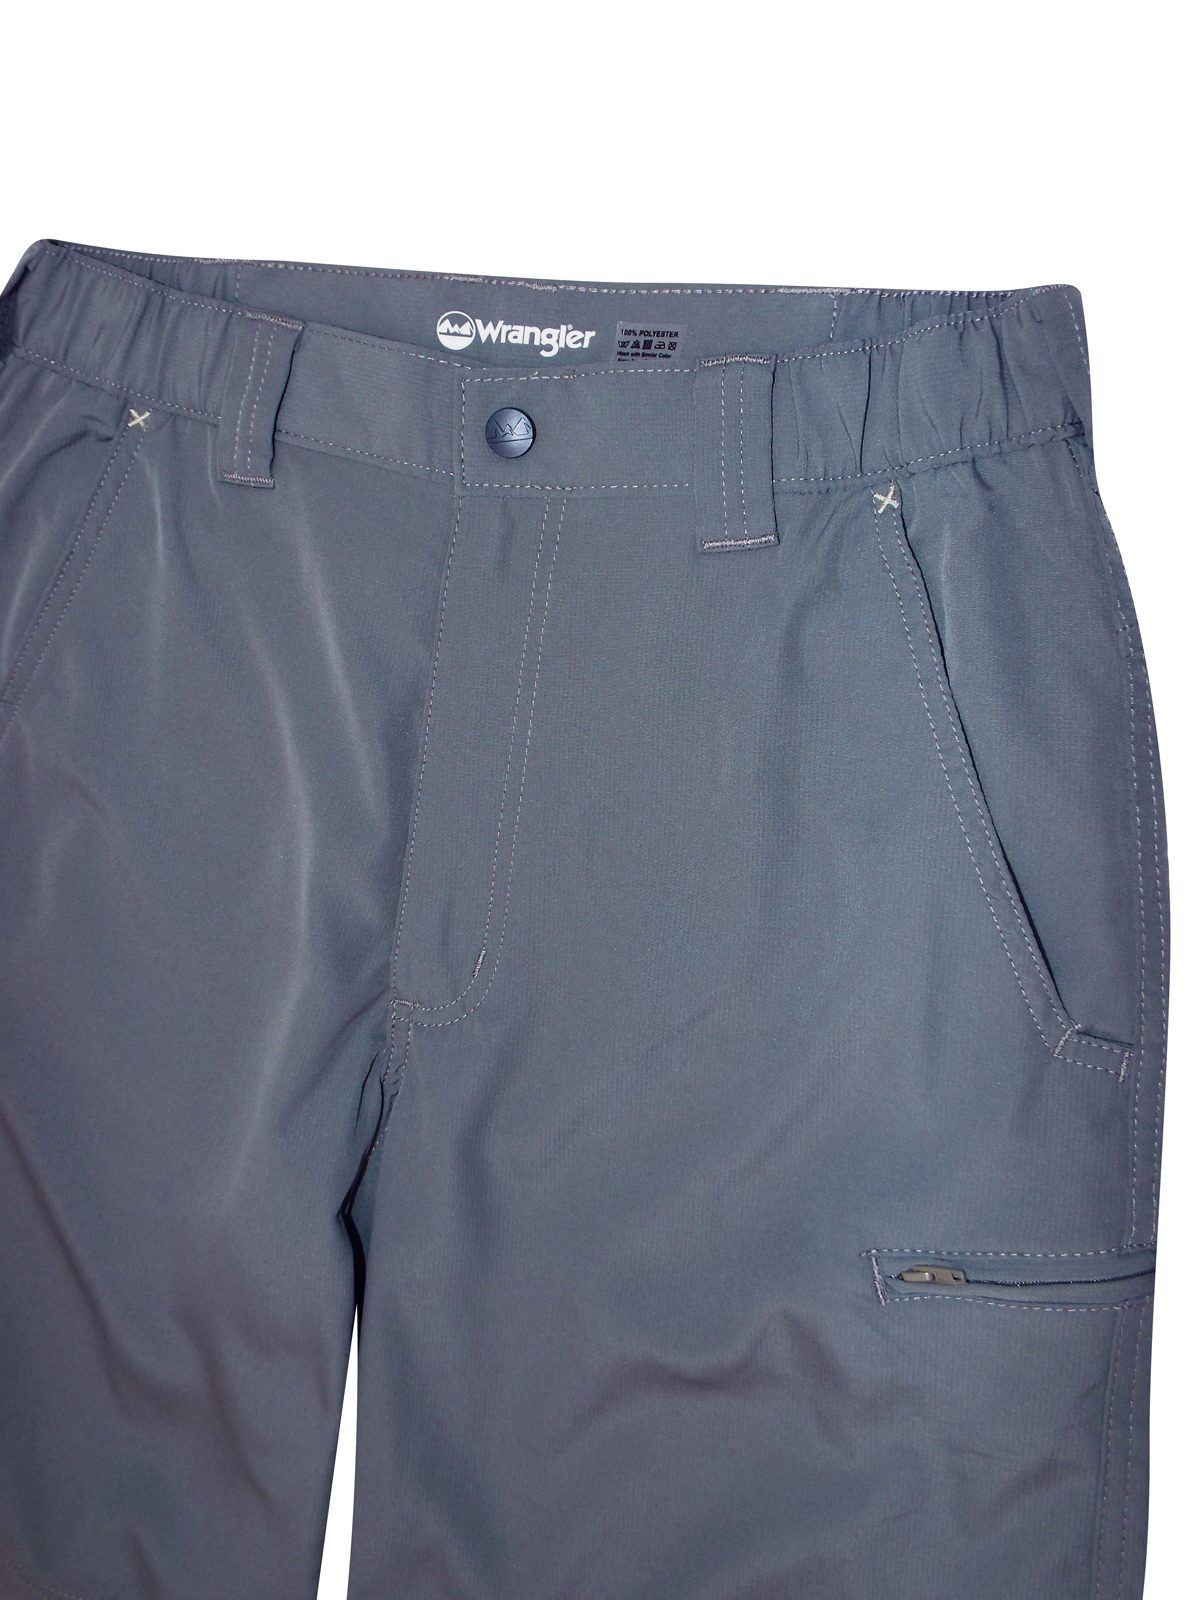 Wrangler - - Wr4ngler SLATE Zipped Pocket Cargo Shorts - Waist Size 32 ...